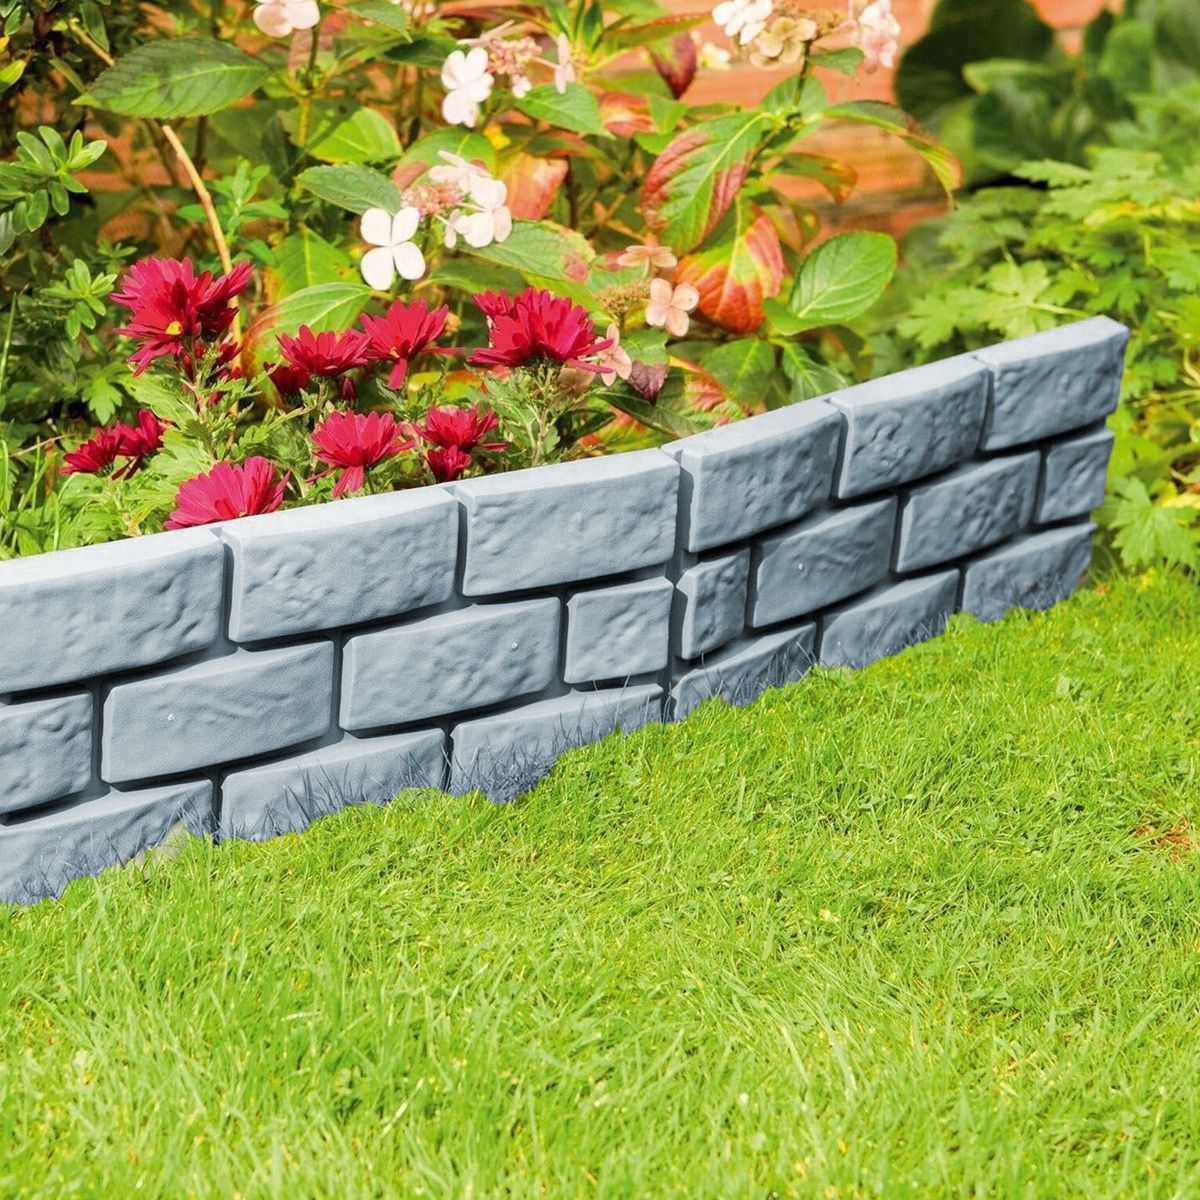 Imitation-Grey-Brick-Courtyard-Fence-Garden-Lawn-Edging-Plant-Border-Stone-Fence-Decorations-1554438